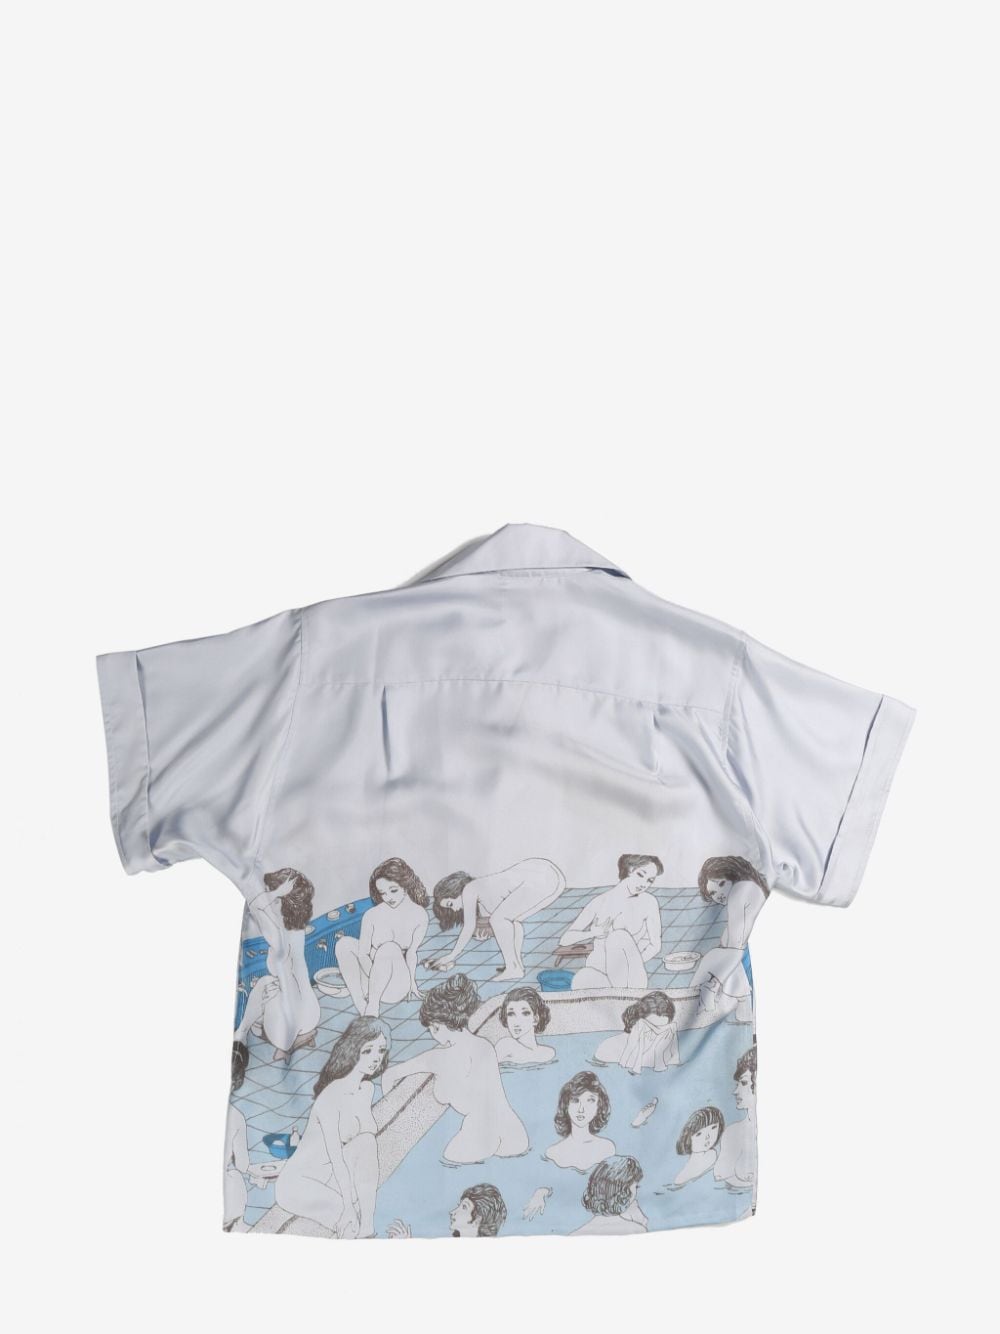 Enfants Riches Déprimés Bath House silk shirt - Blauw